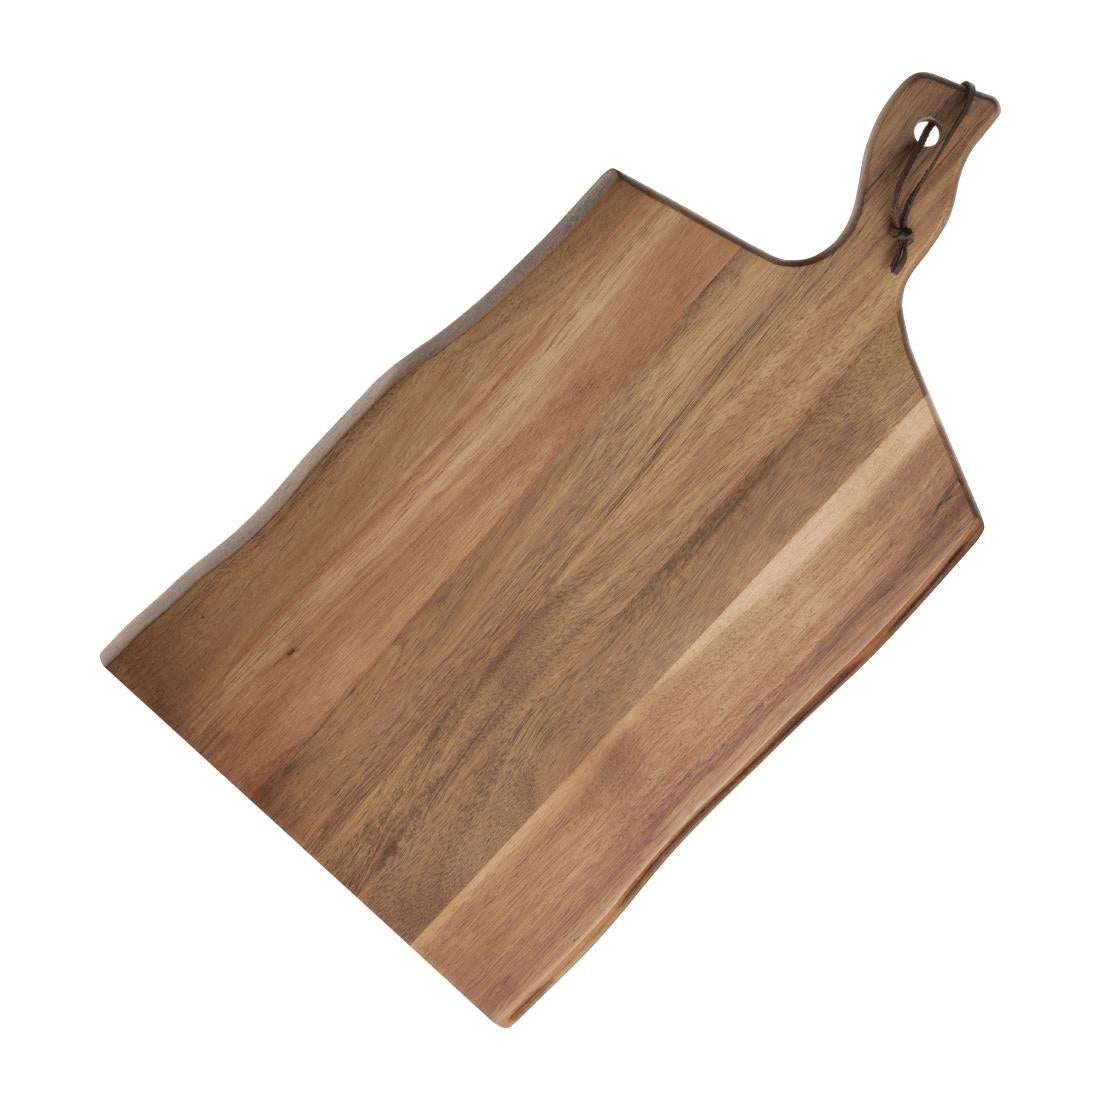 GM264 Olympia Acacia Wood Wavy Handled Wooden Board Large 355mm